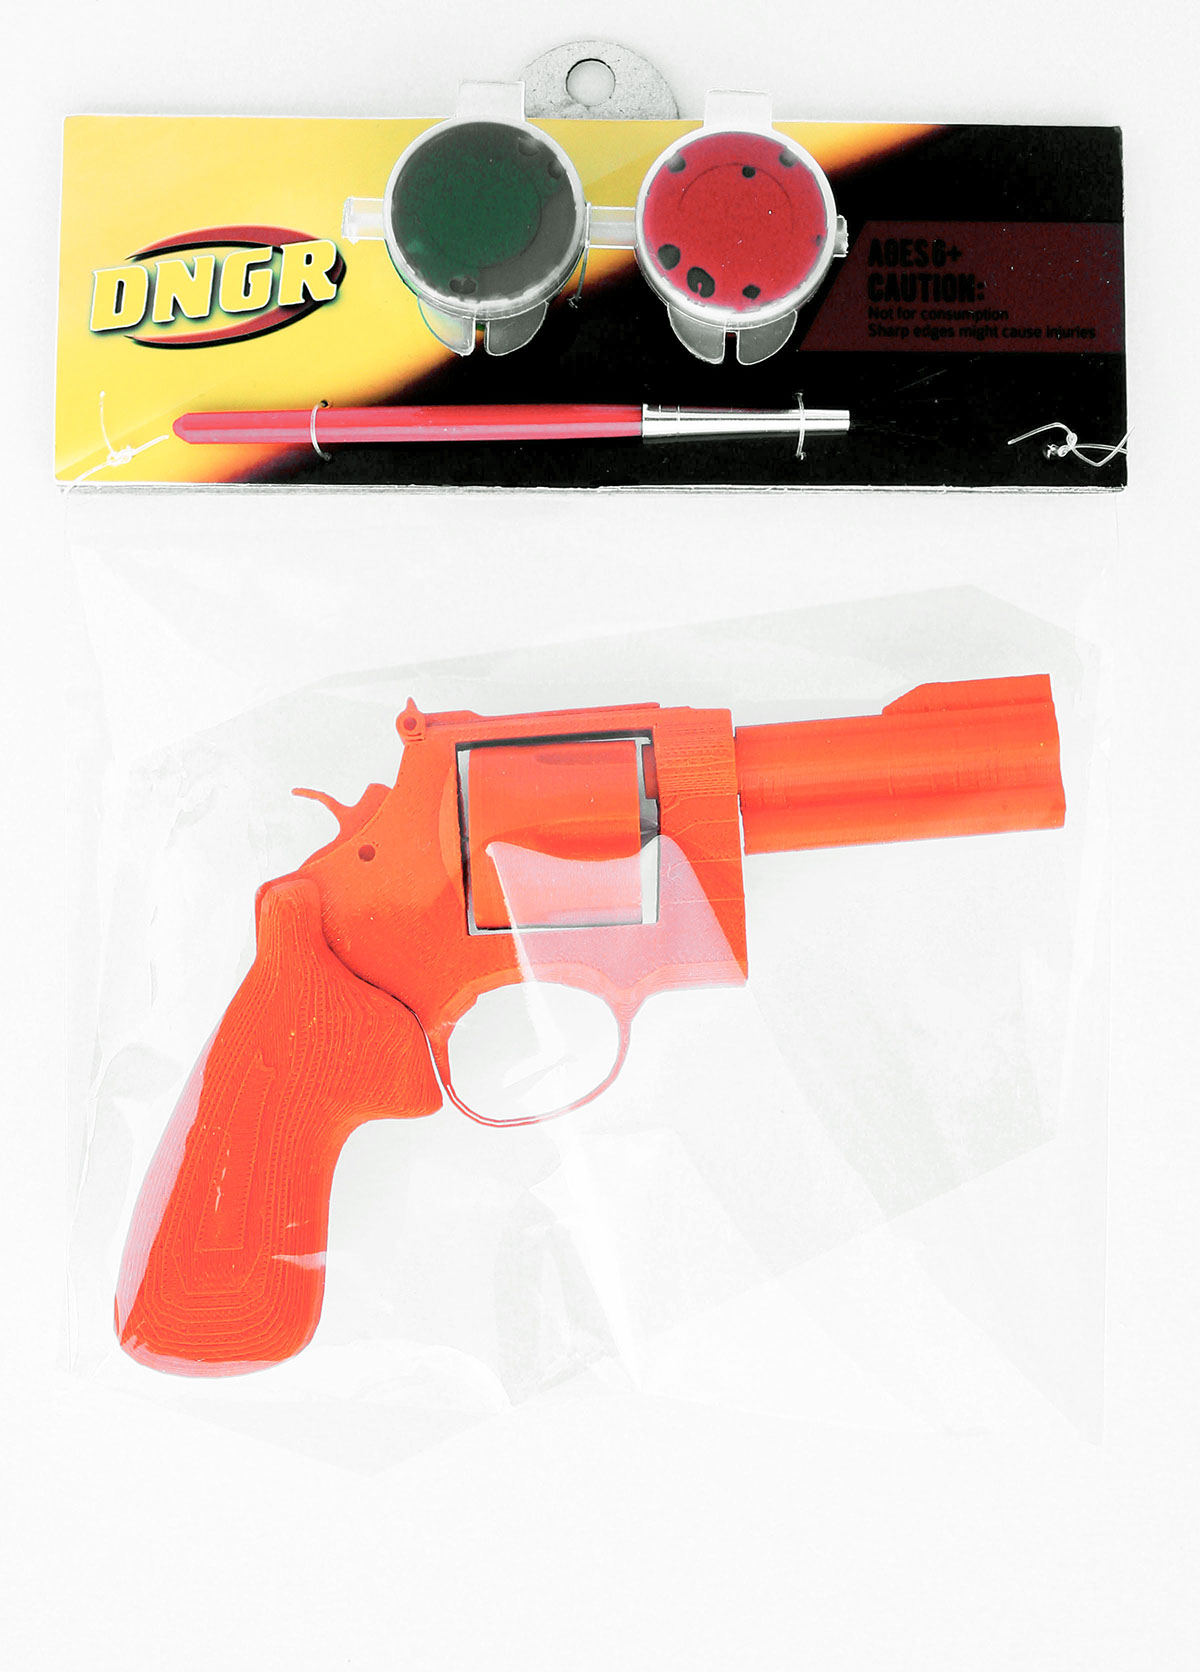 3d print conceptual weapons toys guns shrunken irony